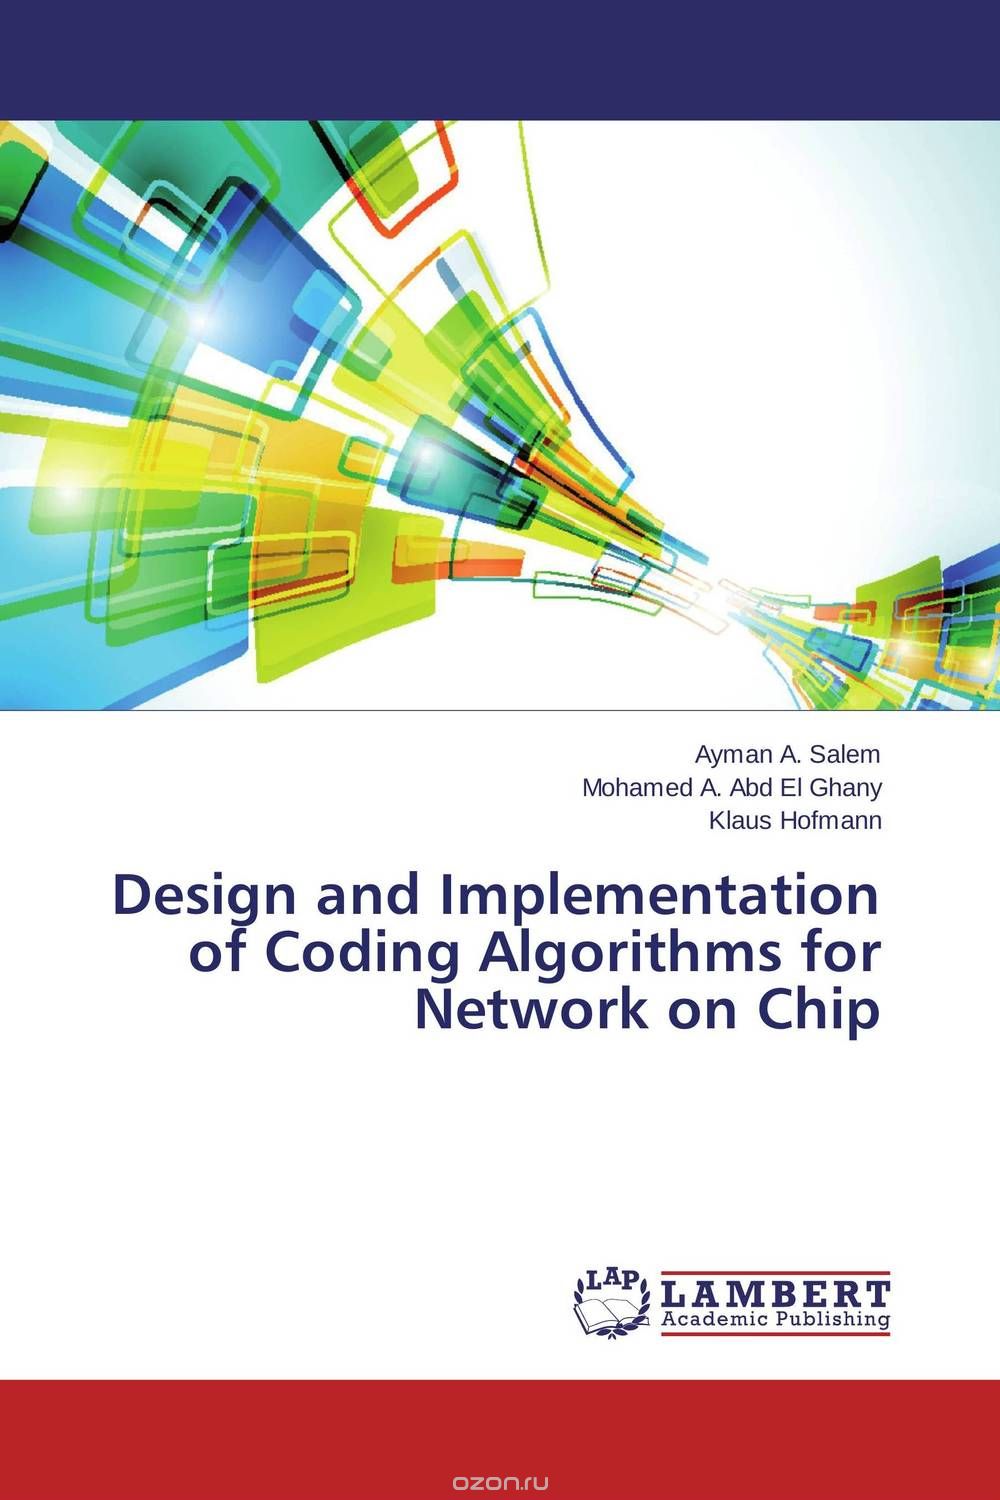 Скачать книгу "Design and Implementation of Coding Algorithms for Network on Chip"